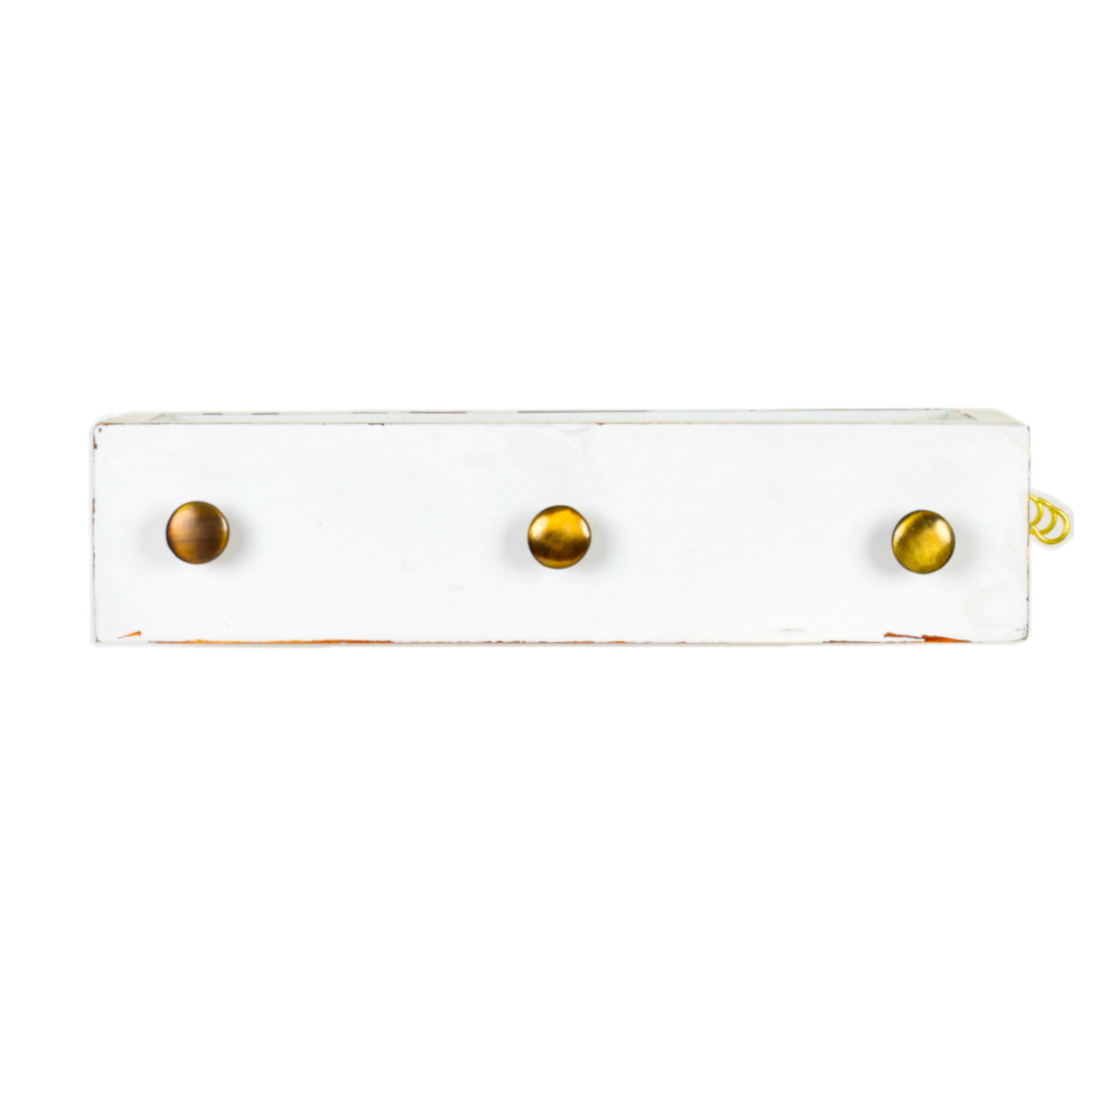 CustHum-Maia-wall-mounted-jewellery-stand-shelf-white01